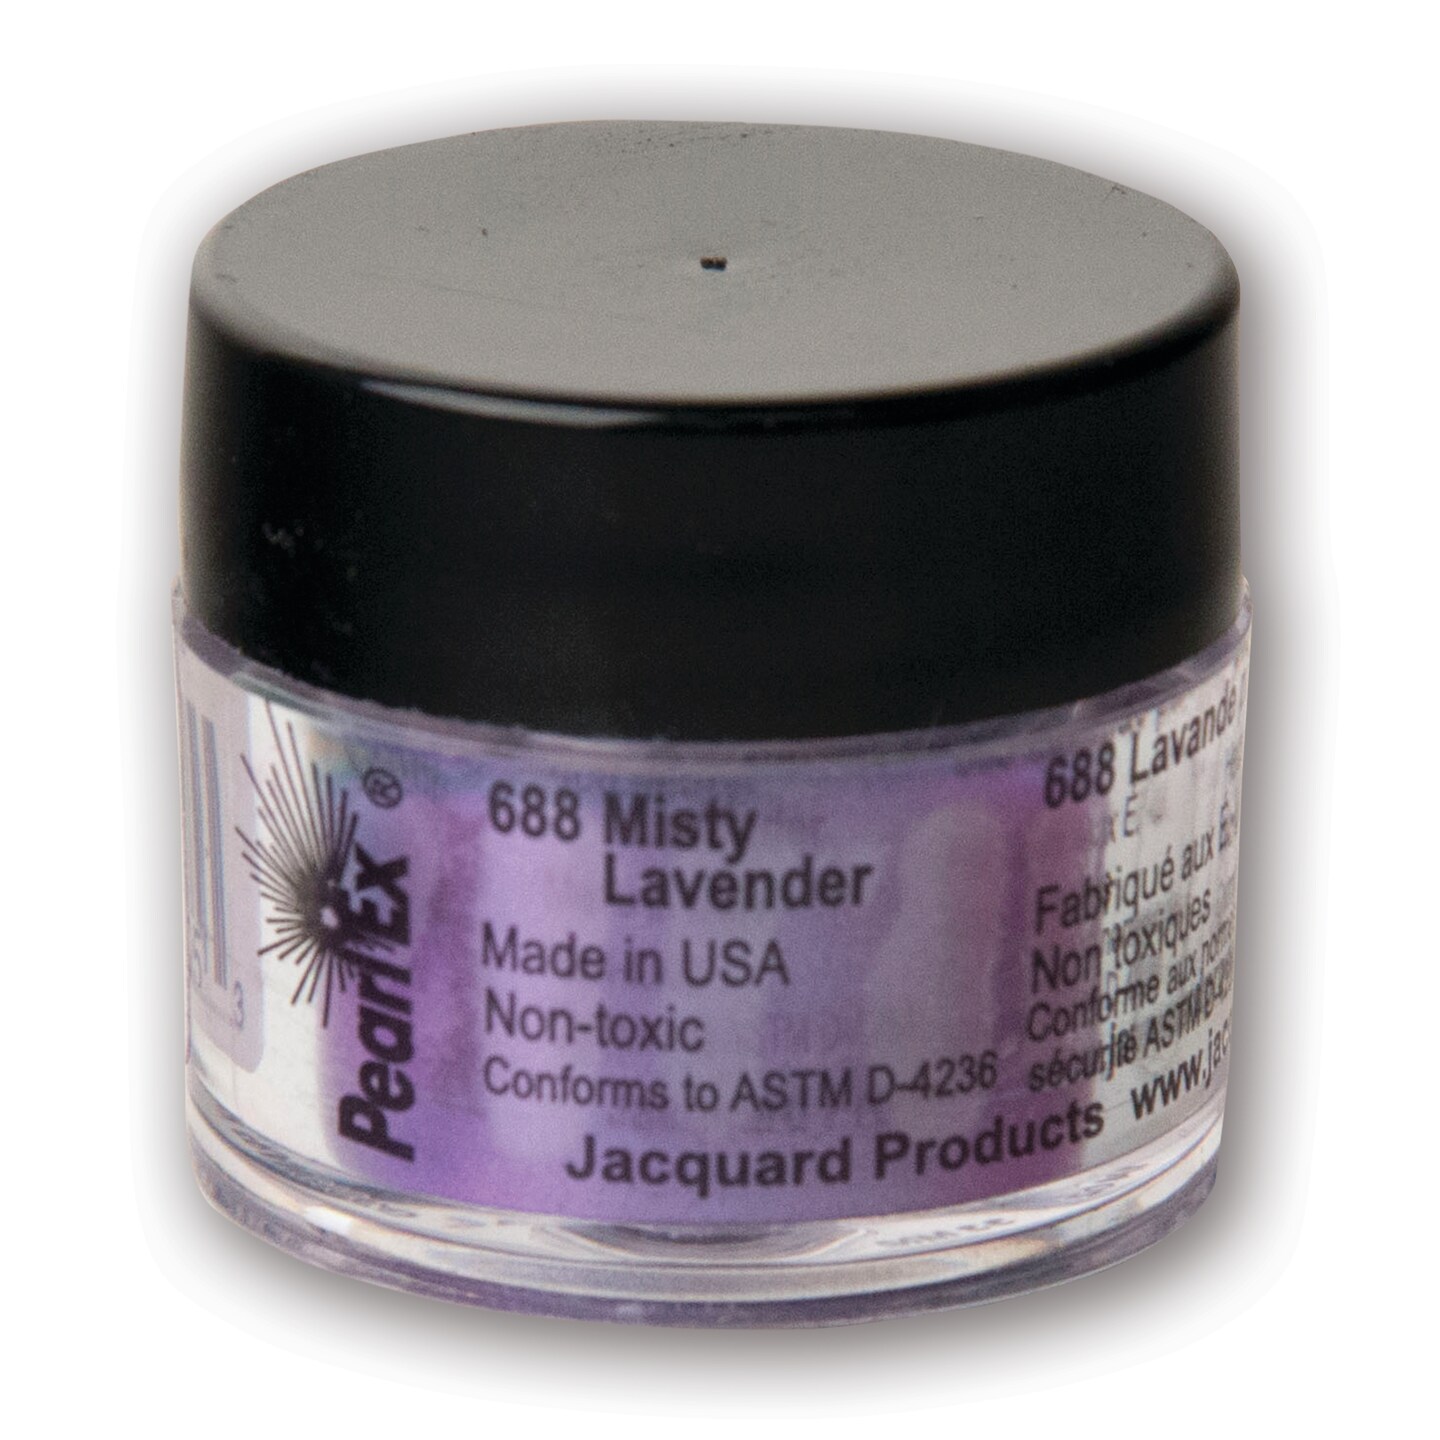 Jacquard Pearl Ex Pigment, 3g, Misty Lavender